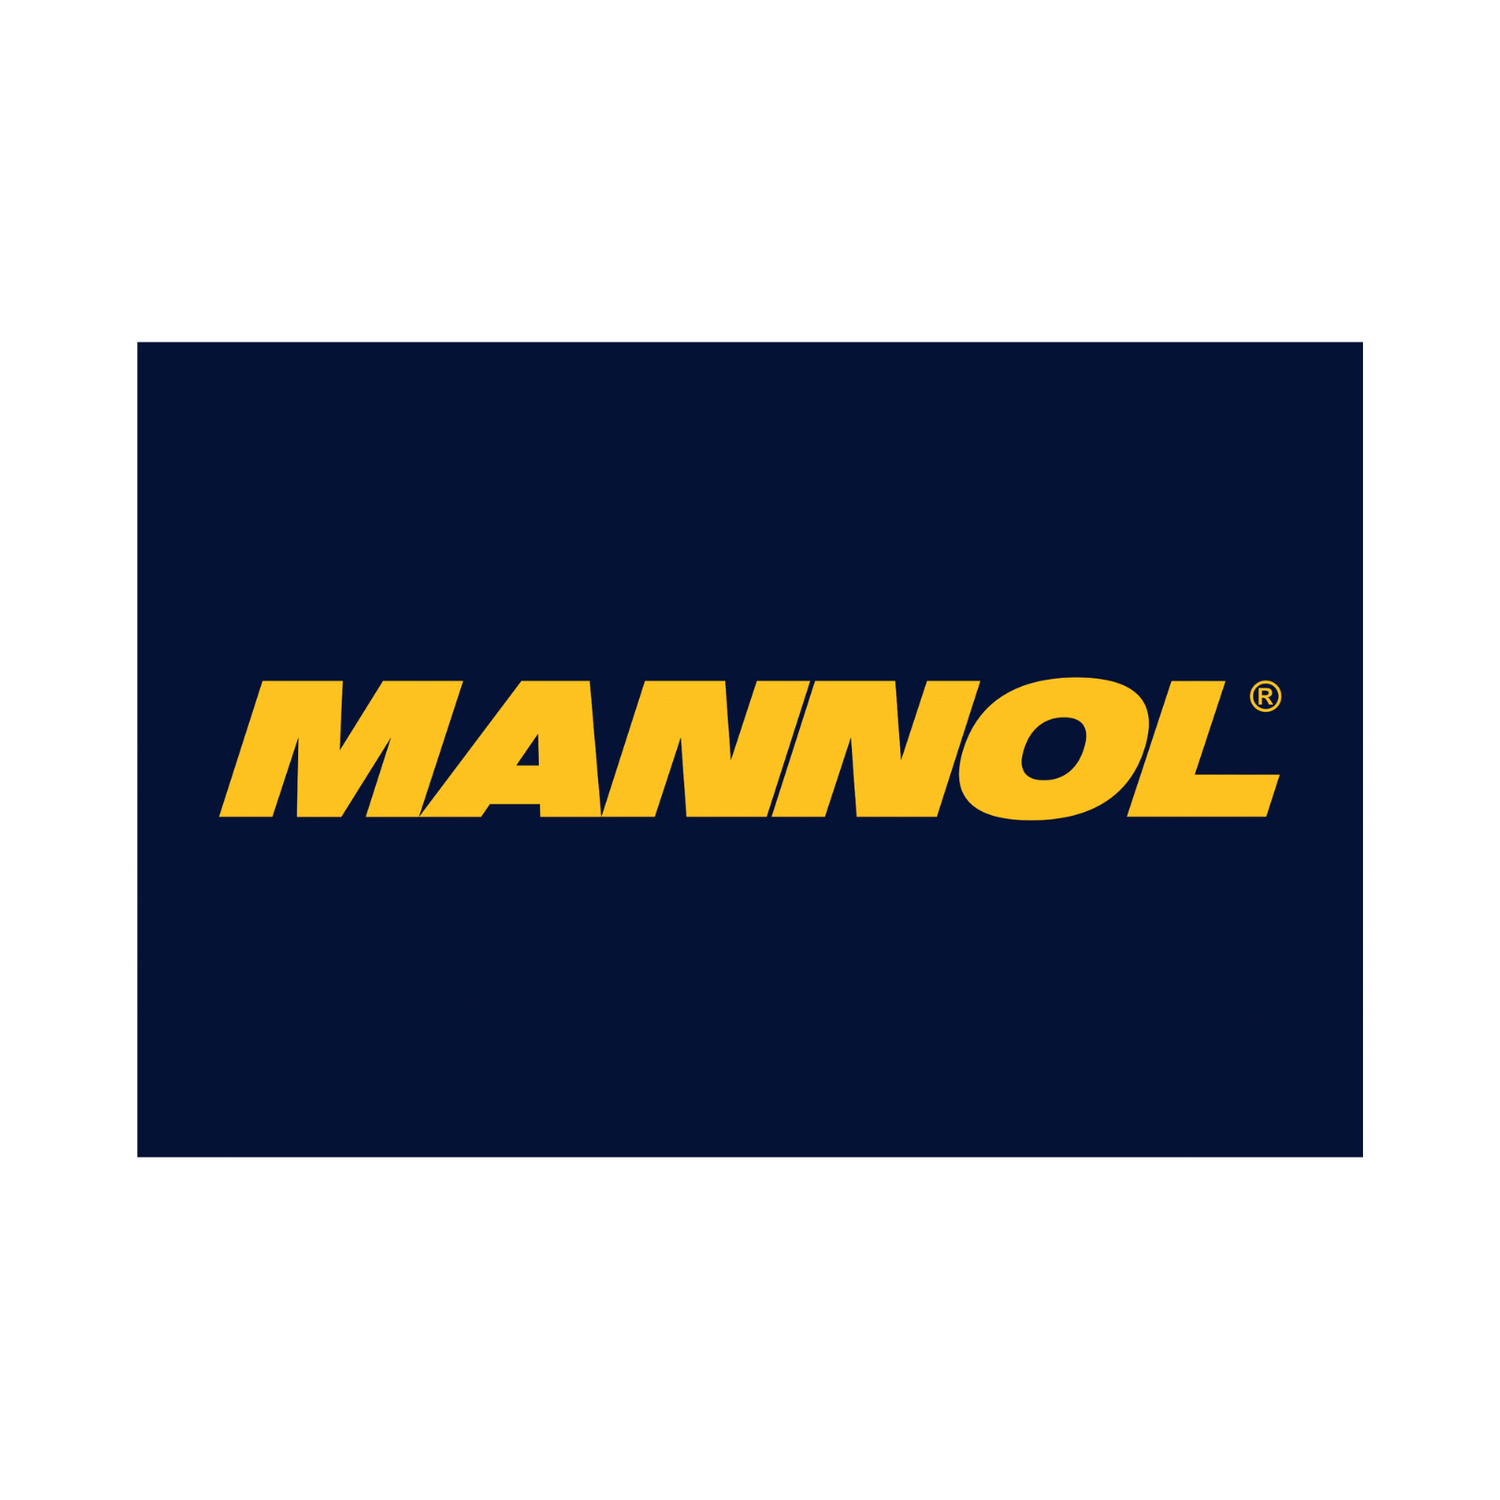 Mannol logo